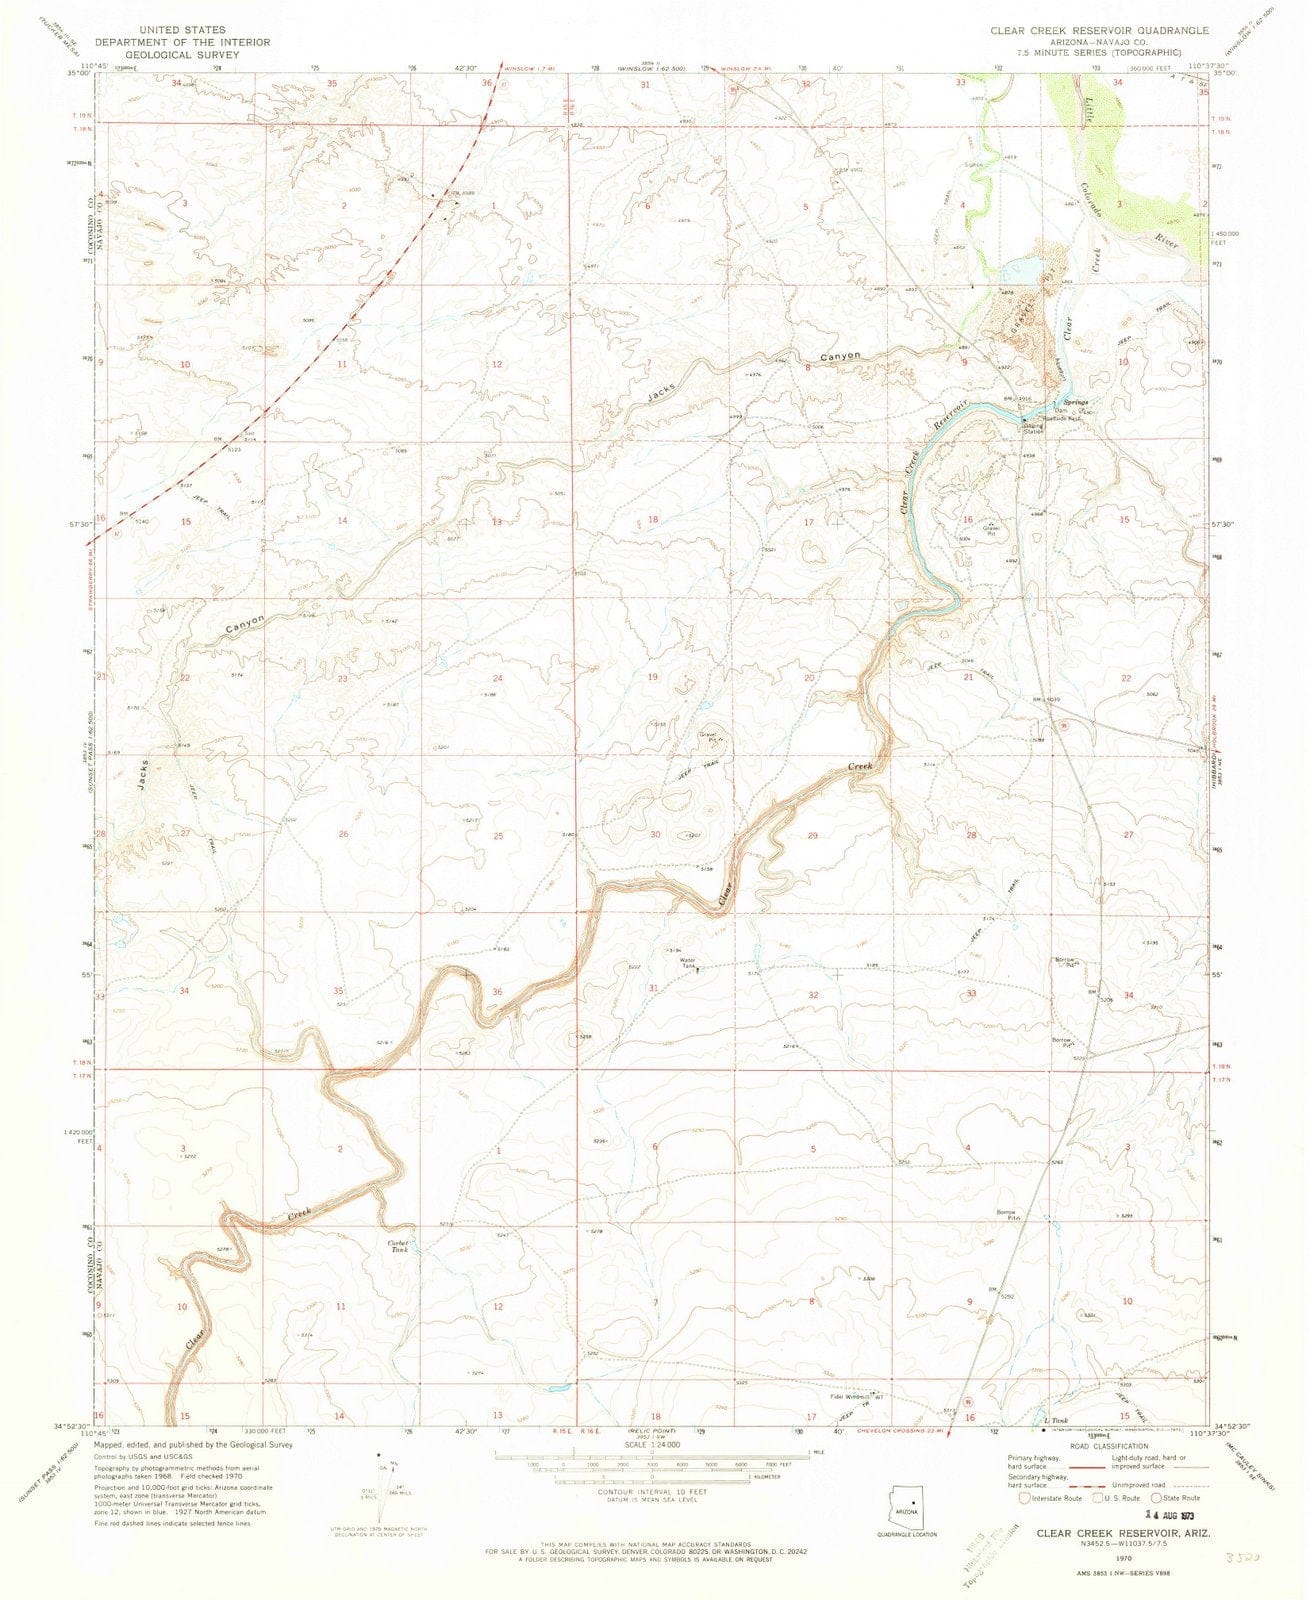 1970 Clear Creek Reservoir, AZ - Arizona - USGS Topographic Map